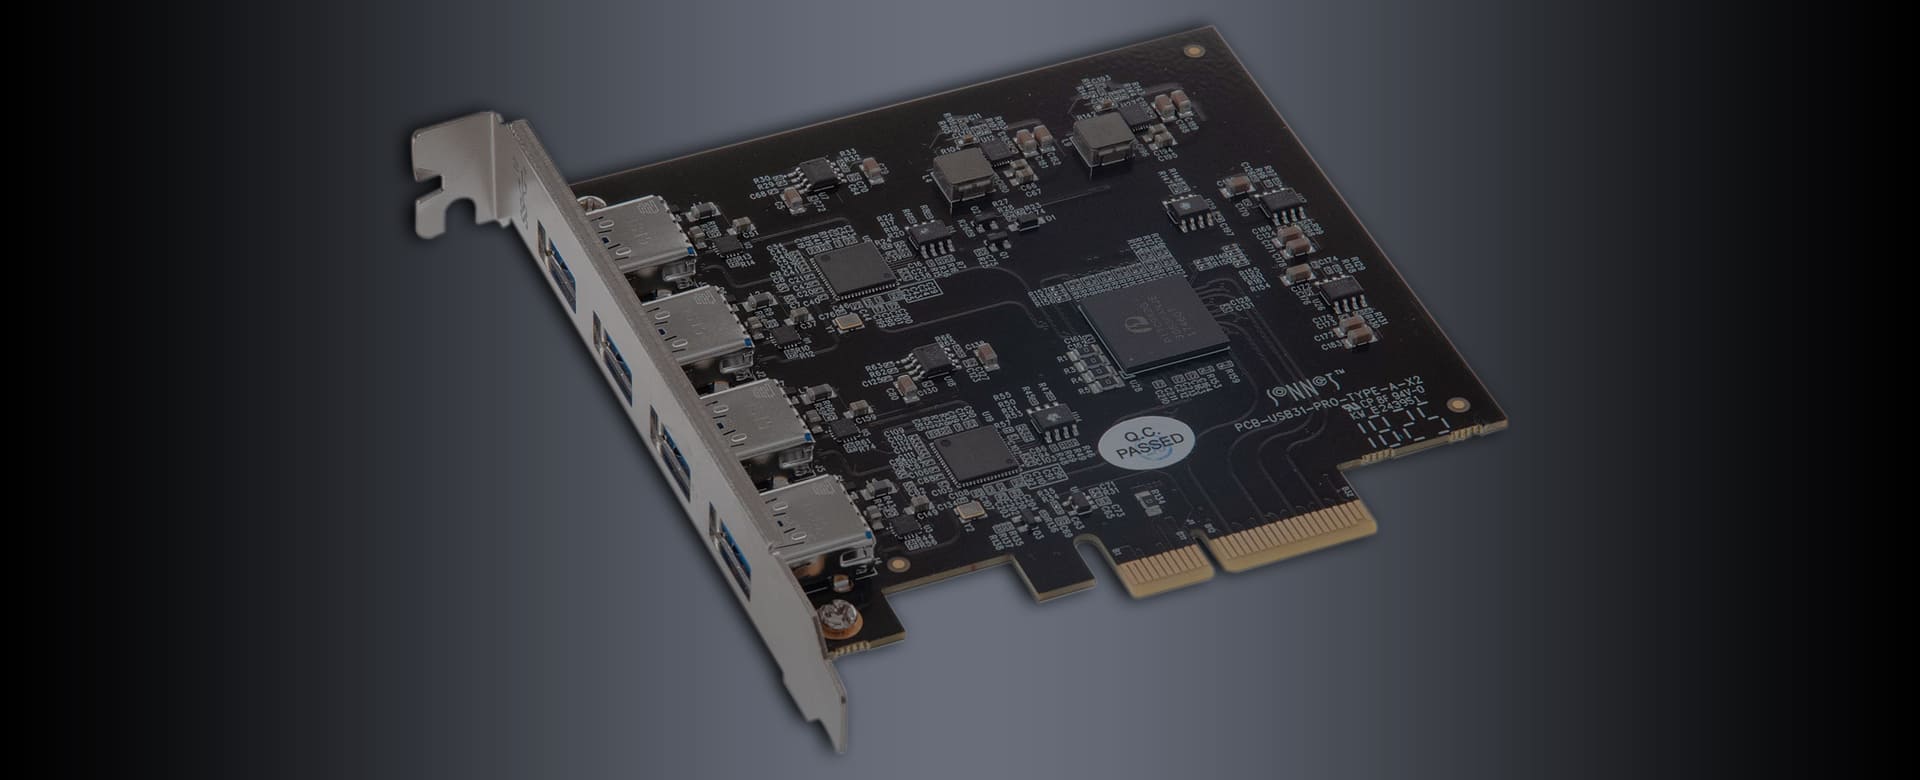 Sonnet Allegro Pro USB 3.1 PCIe